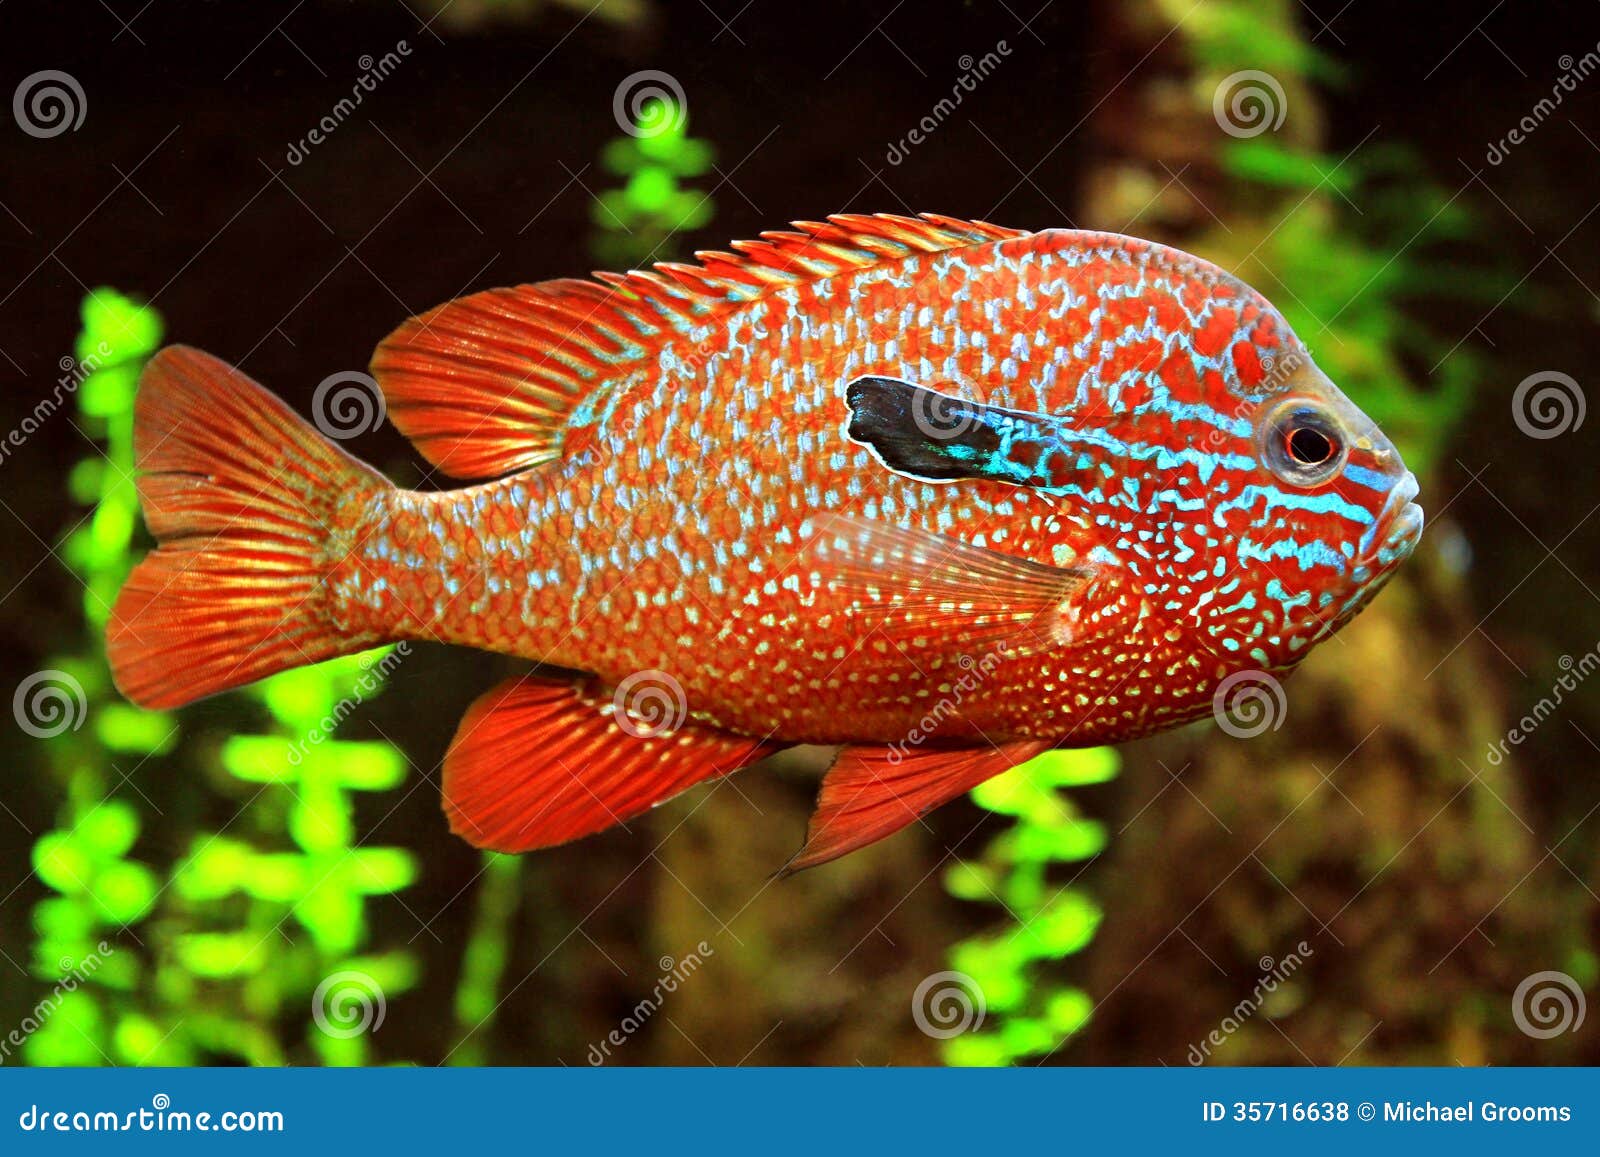 Kleurrijke Vissen stock foto. Image zwemmer, aquarium - 35716638